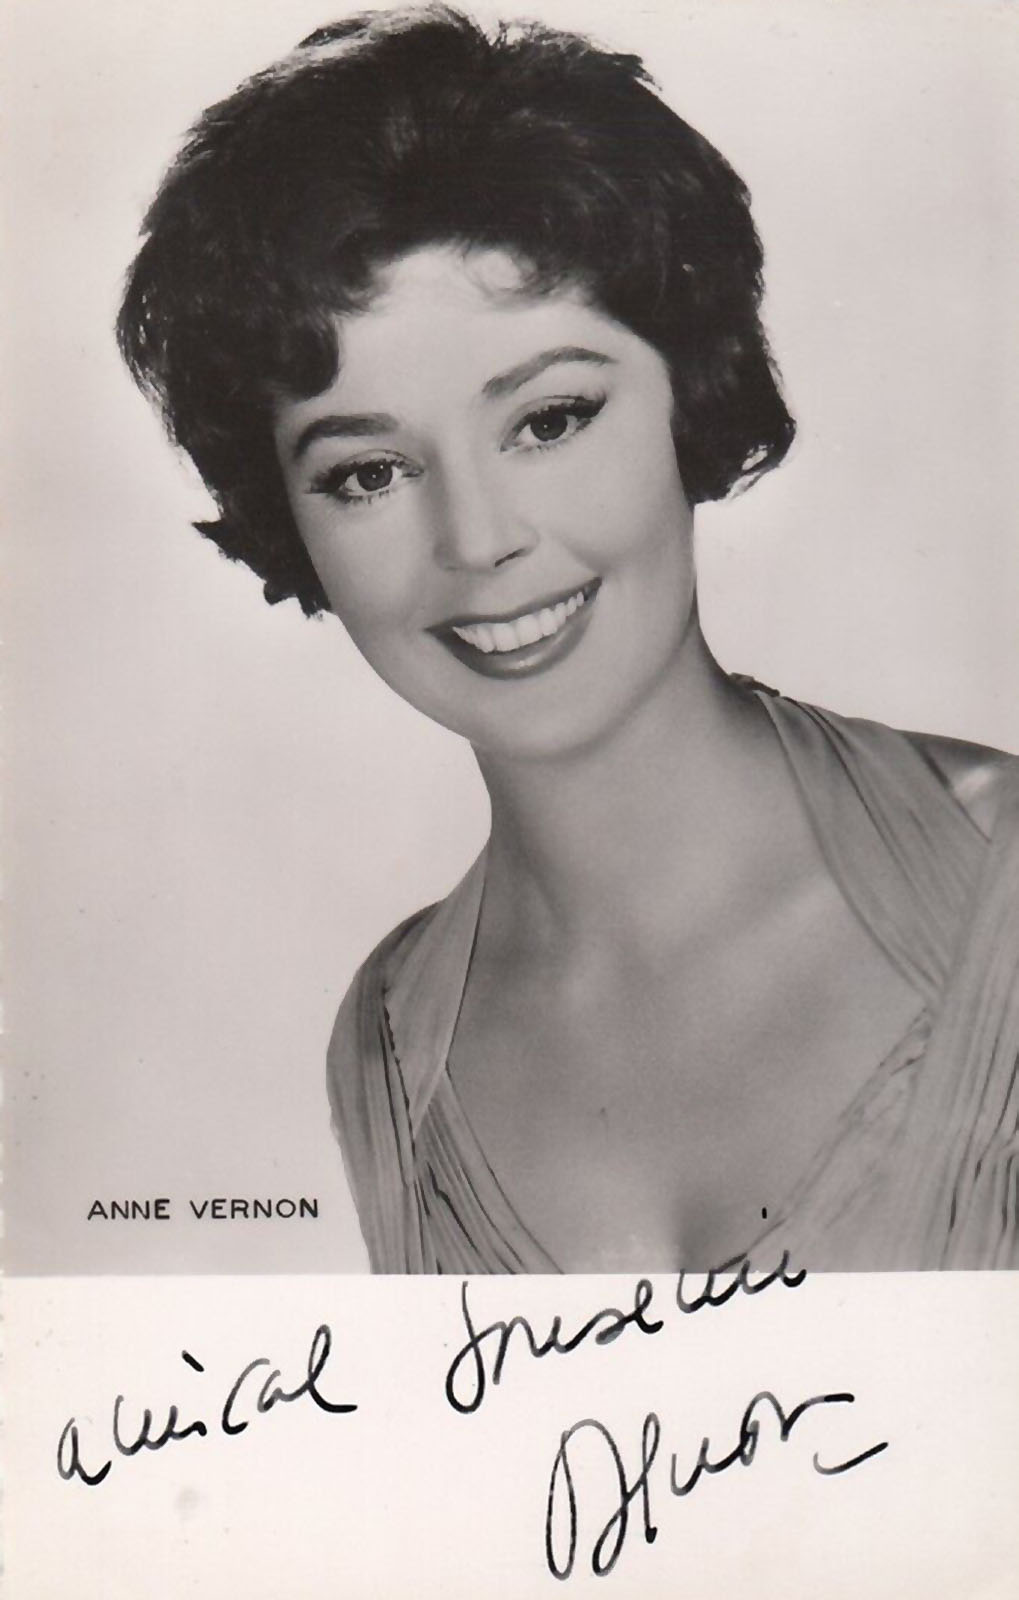 Anne Vernon